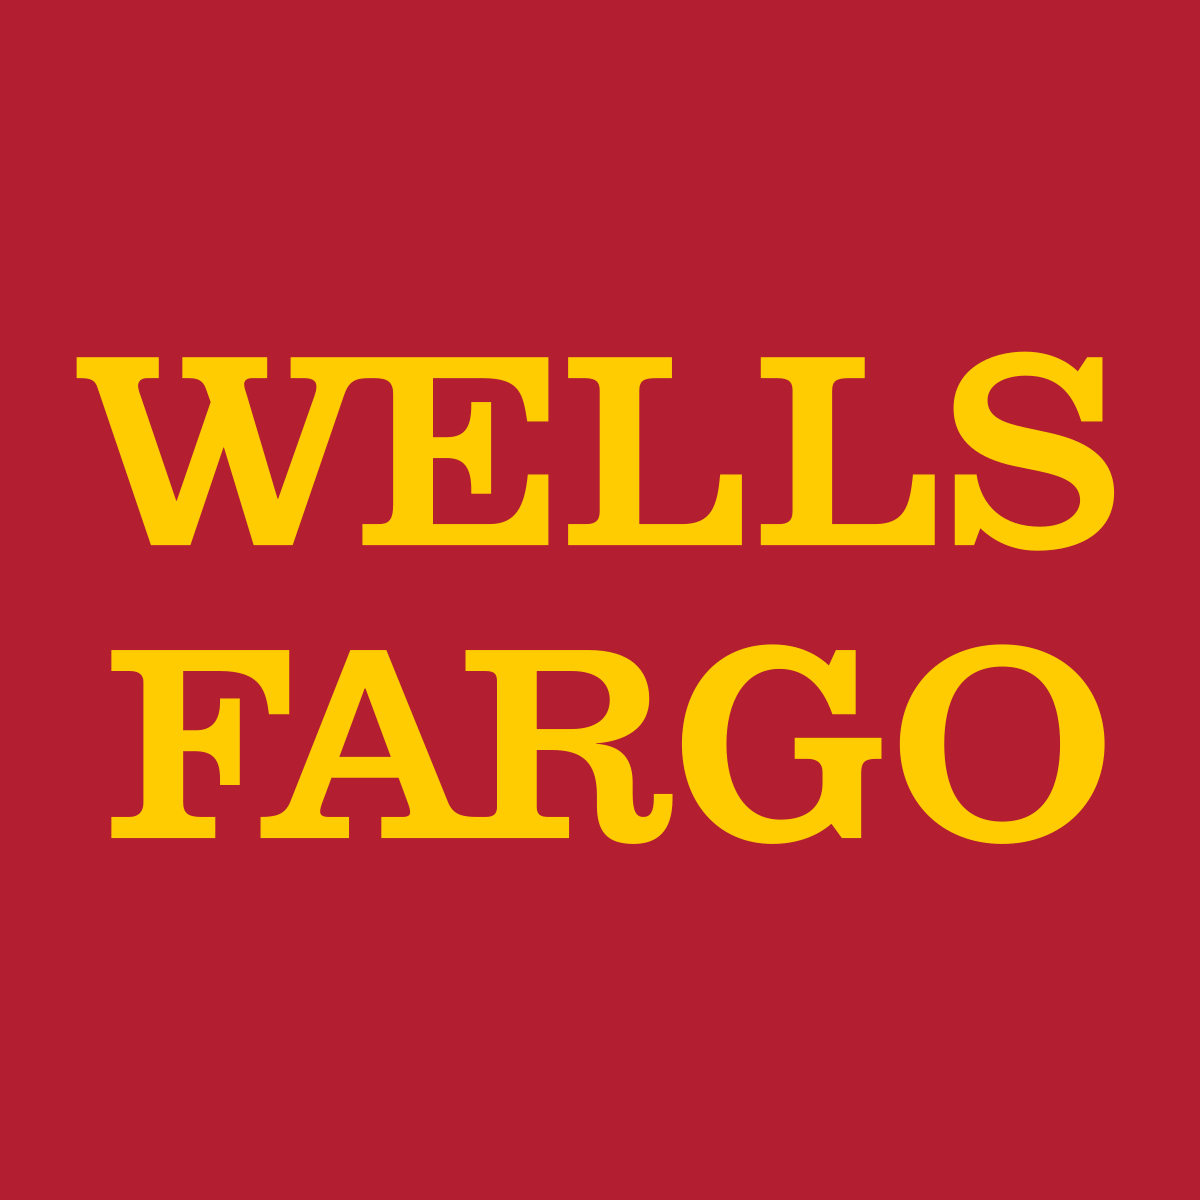 SWOT Analysis of Wells Fargo